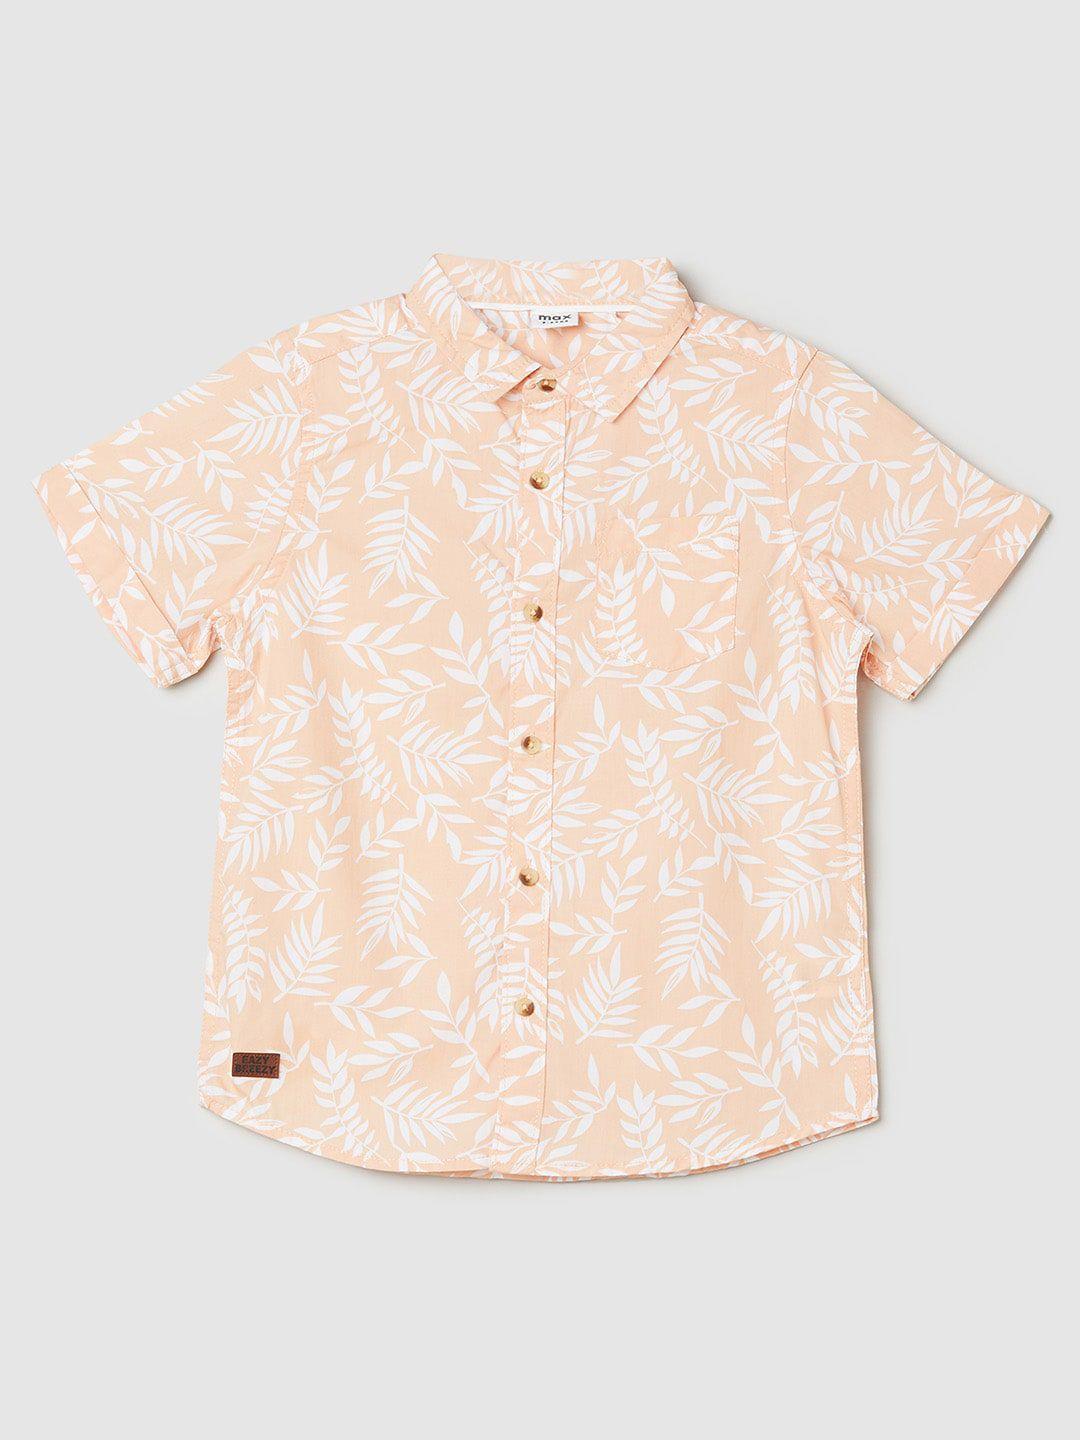 max boys orange floral opaque printed casual shirt